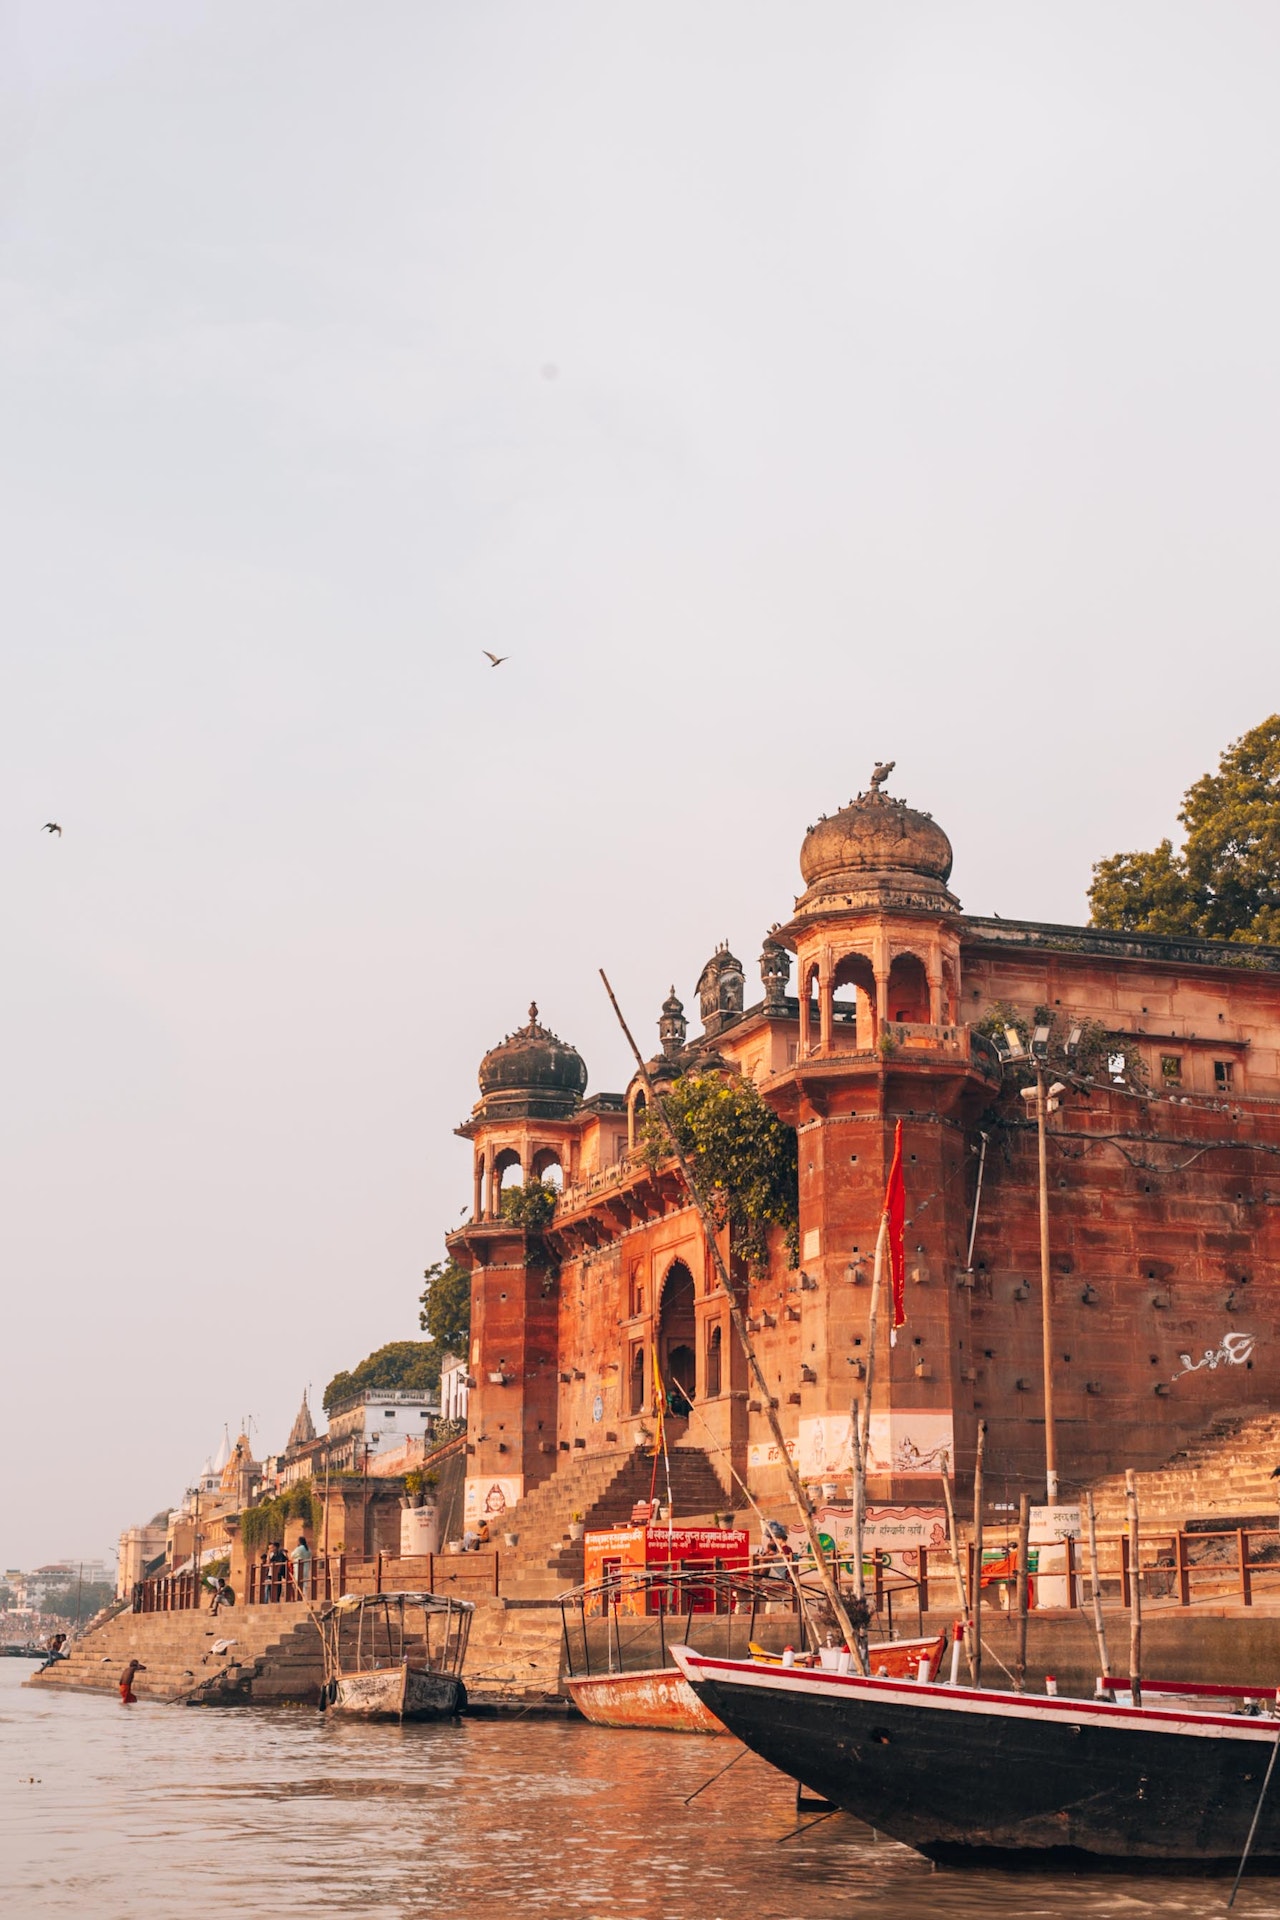 Castle in the city of Varanasi